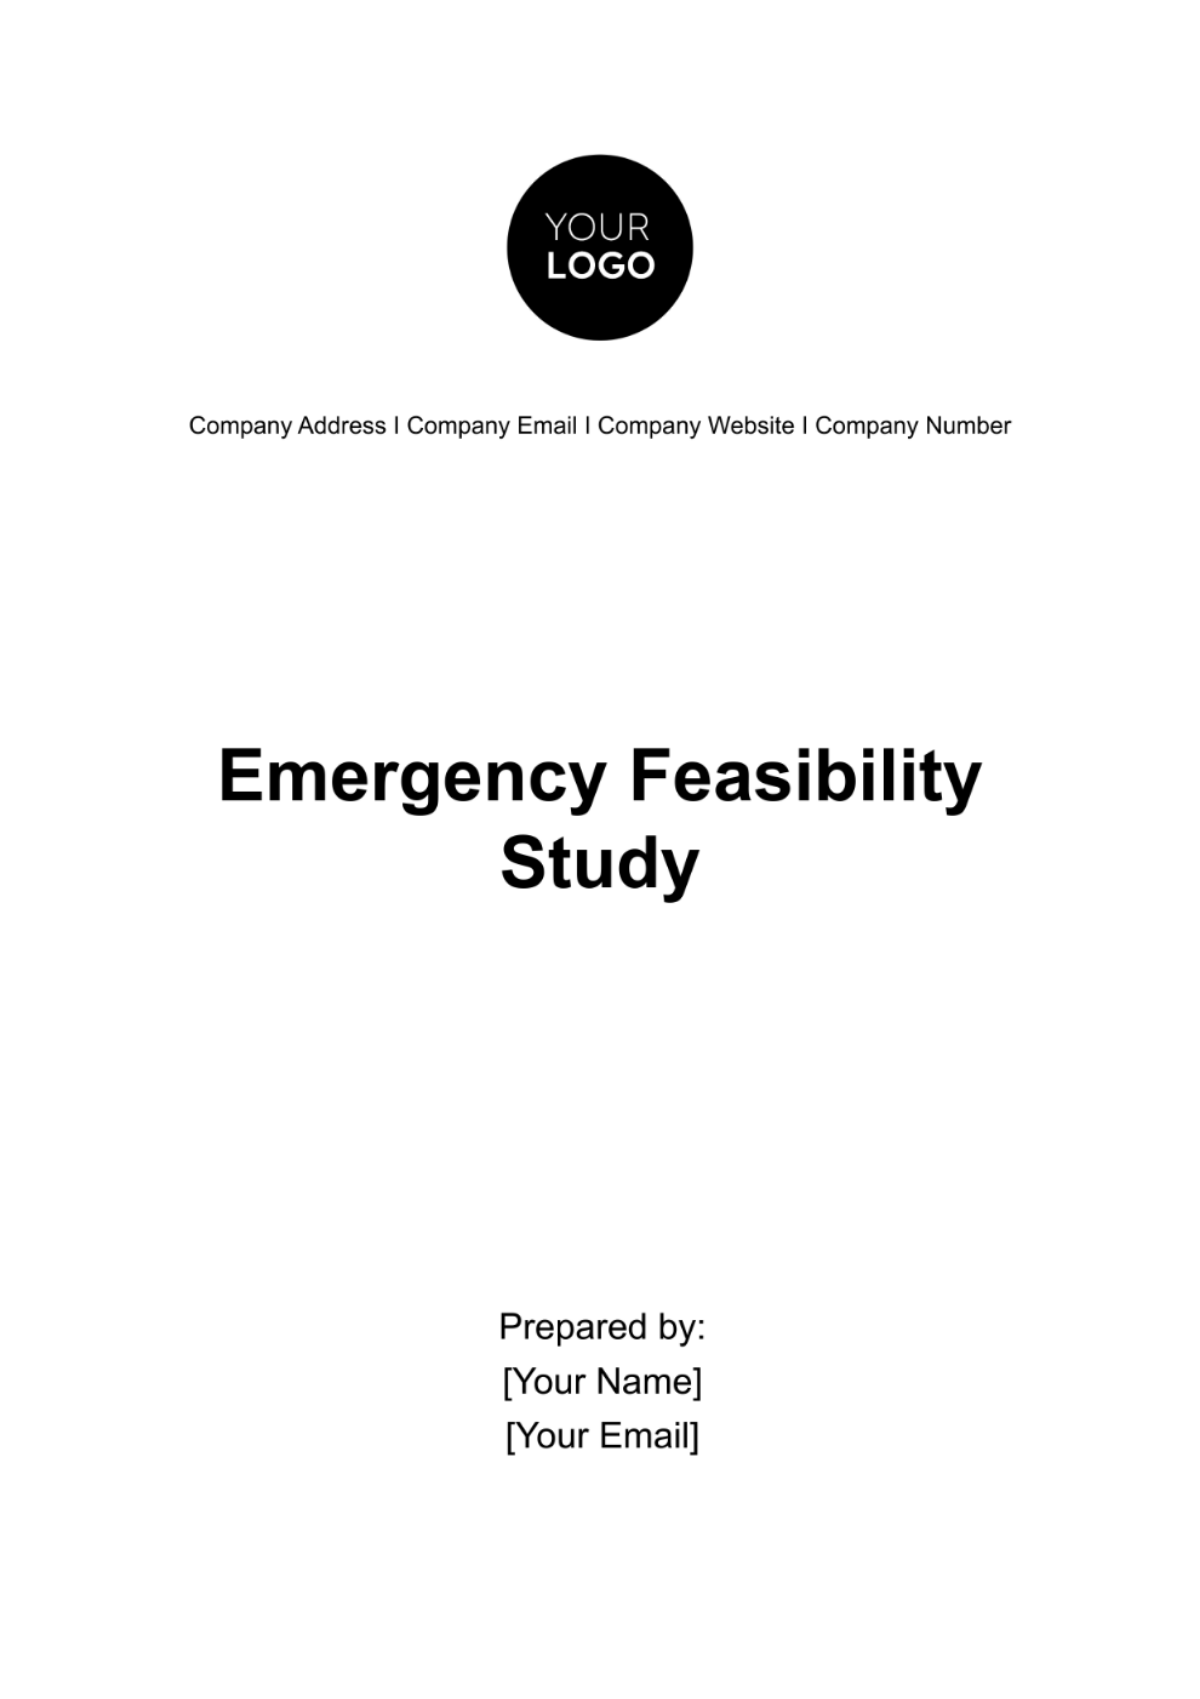 Emergency Feasibility Study Template